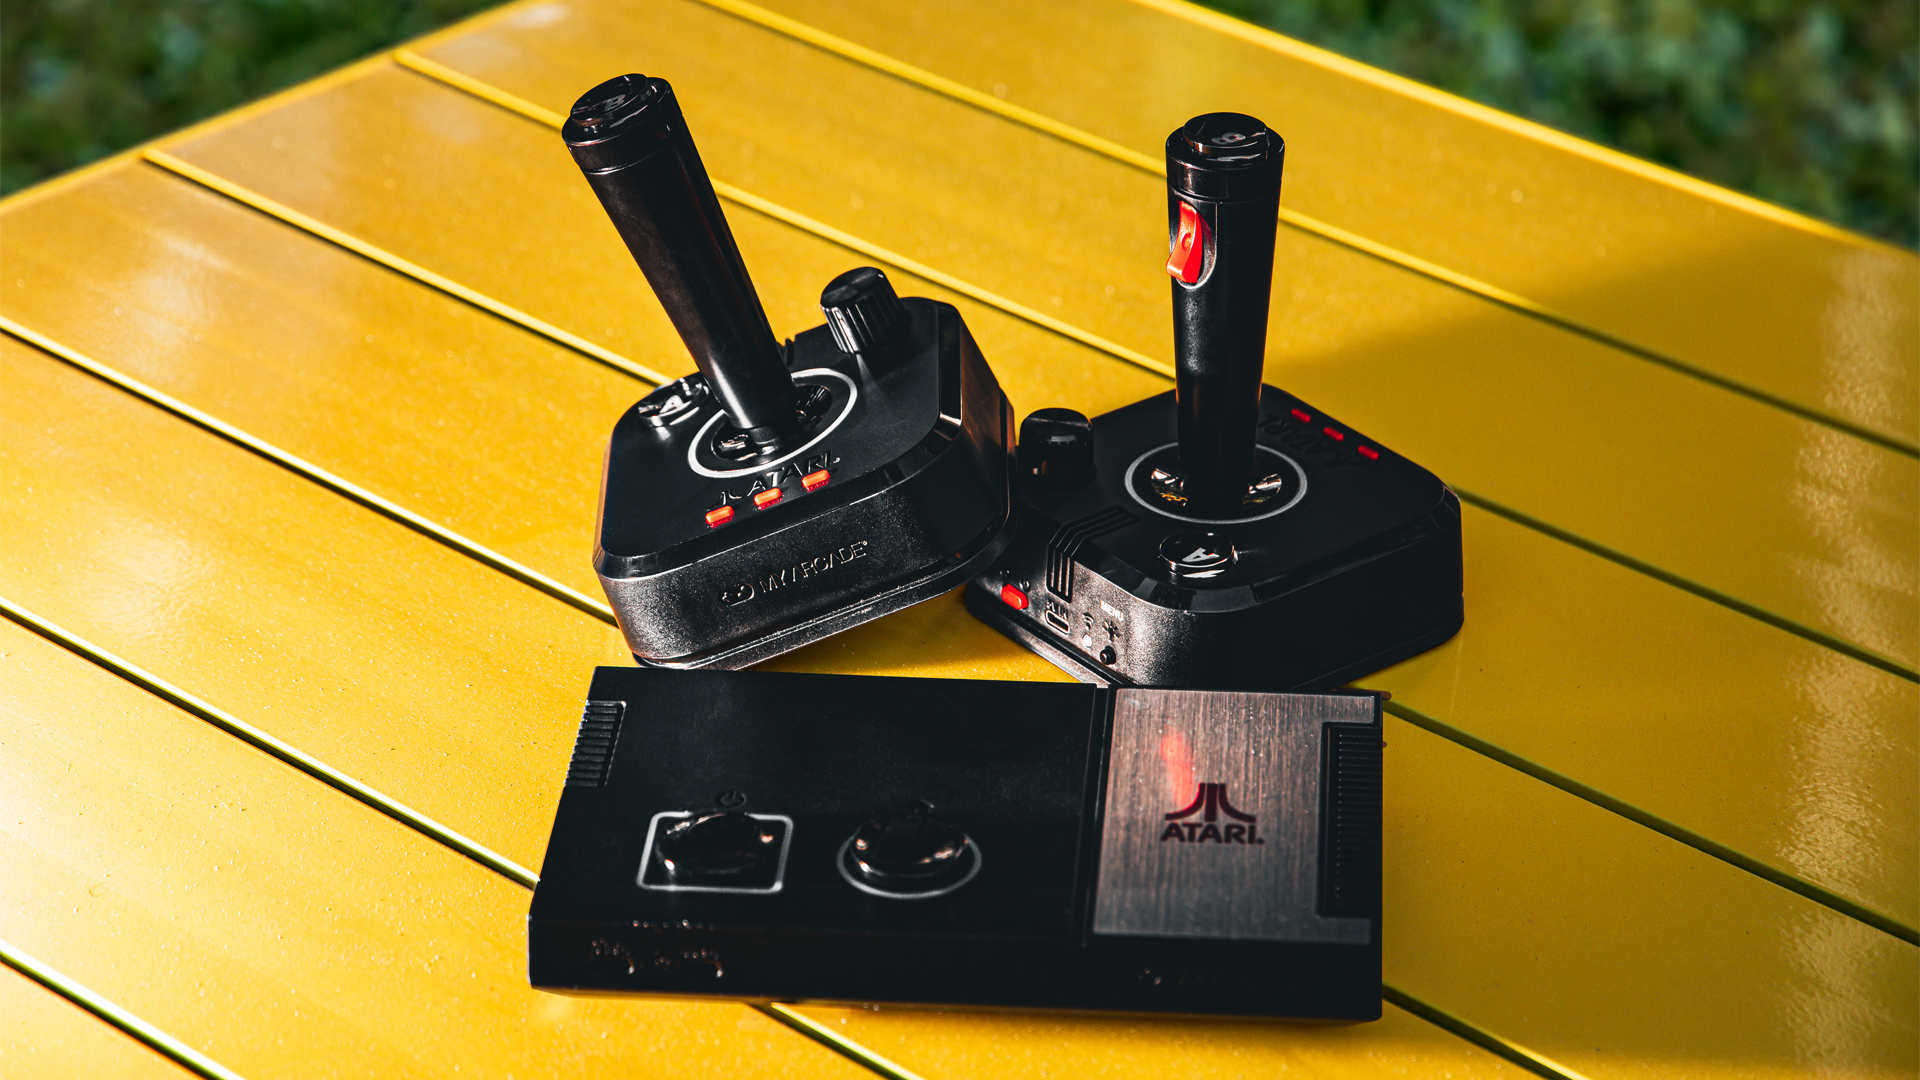 Atari GameStation Pro launches preorders